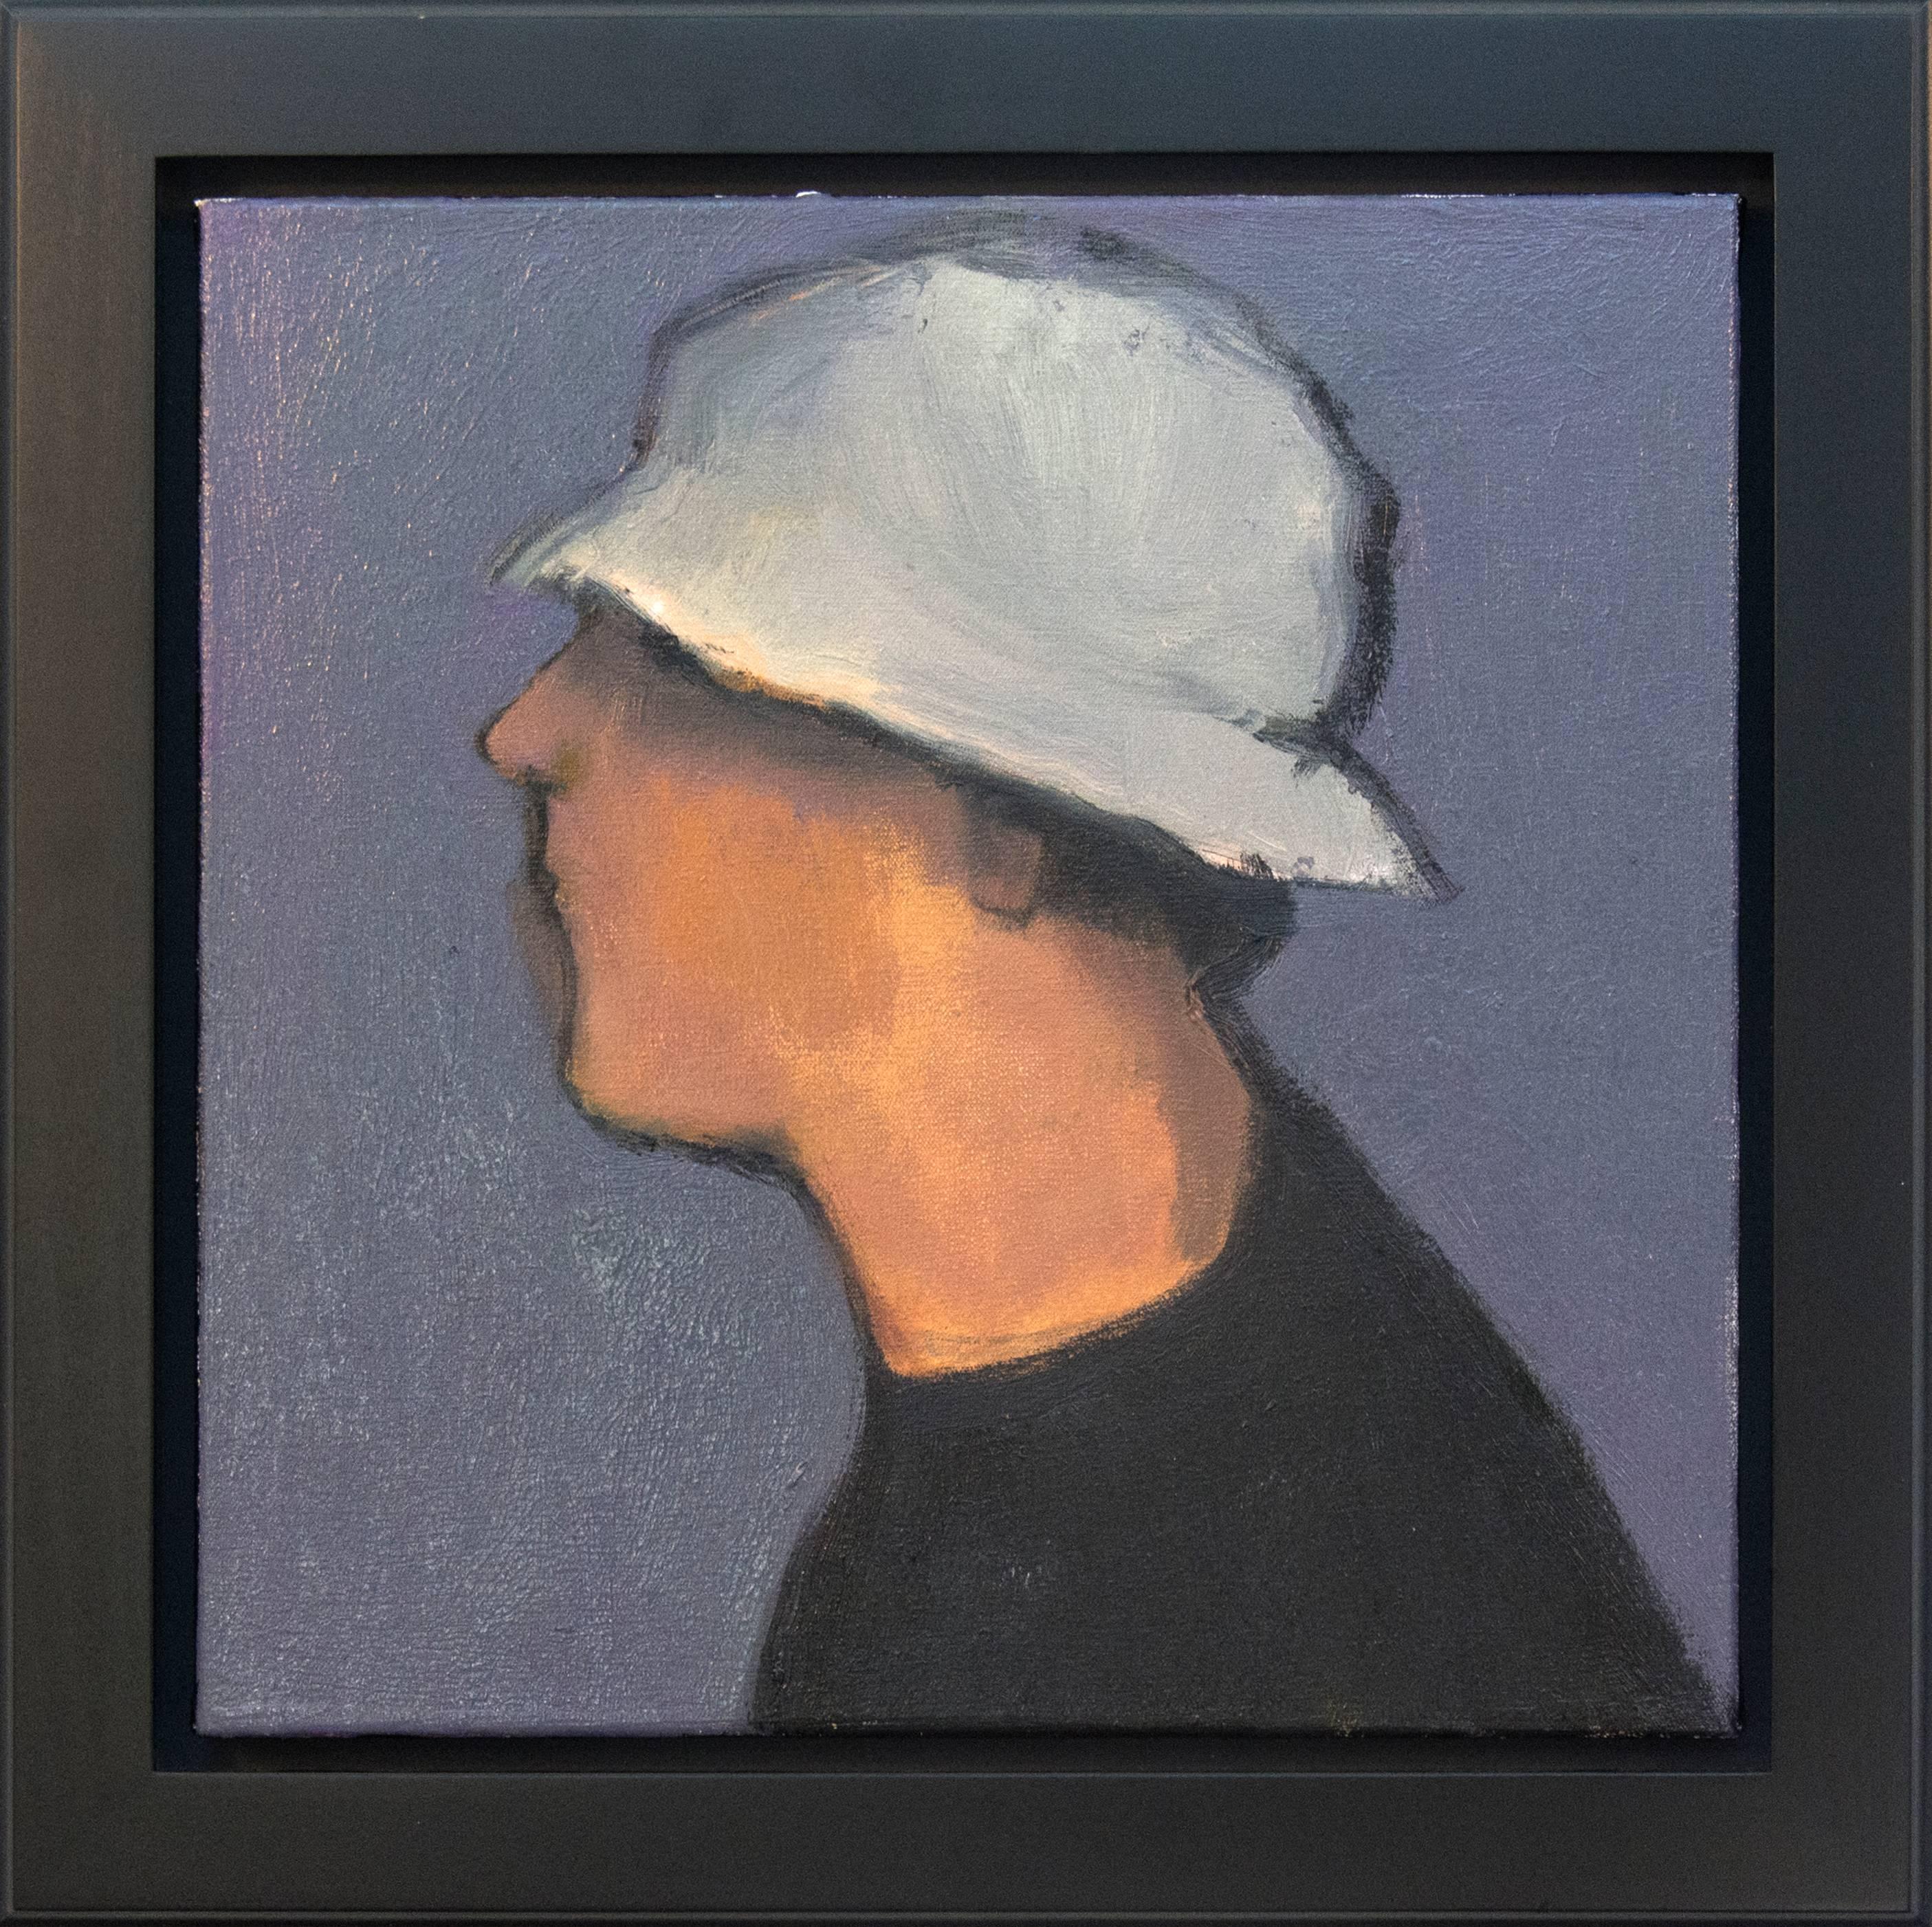 Man with Hat - small blue, white, male portrait figurative still life oil